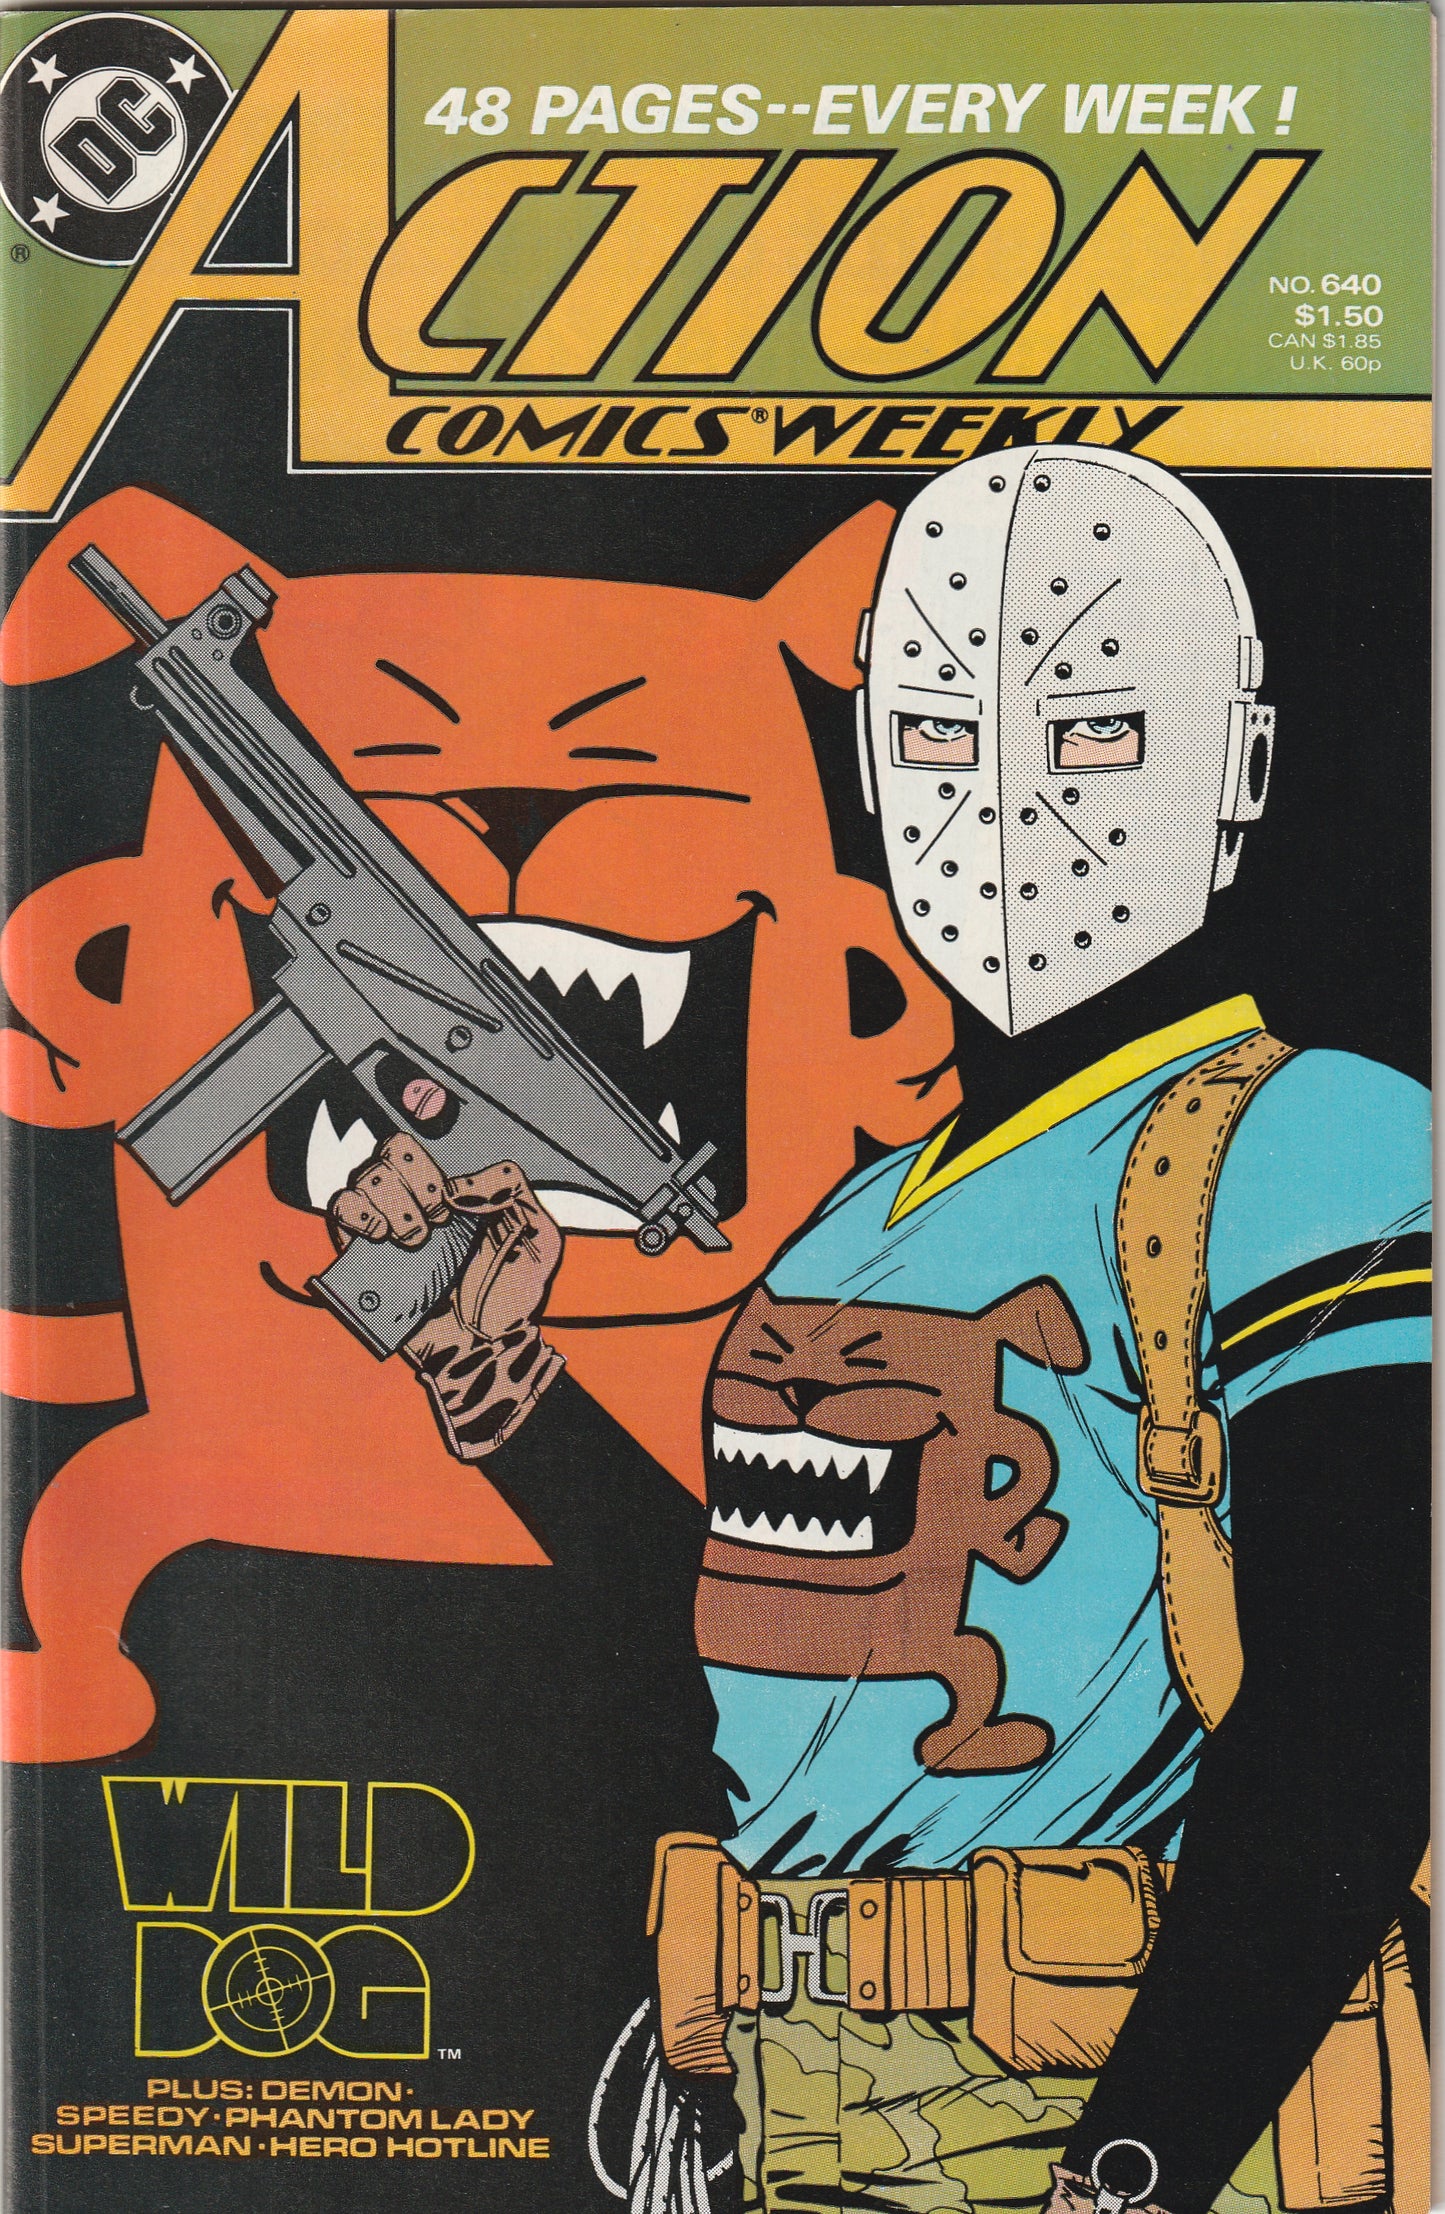 Action Comics #640 (1989)